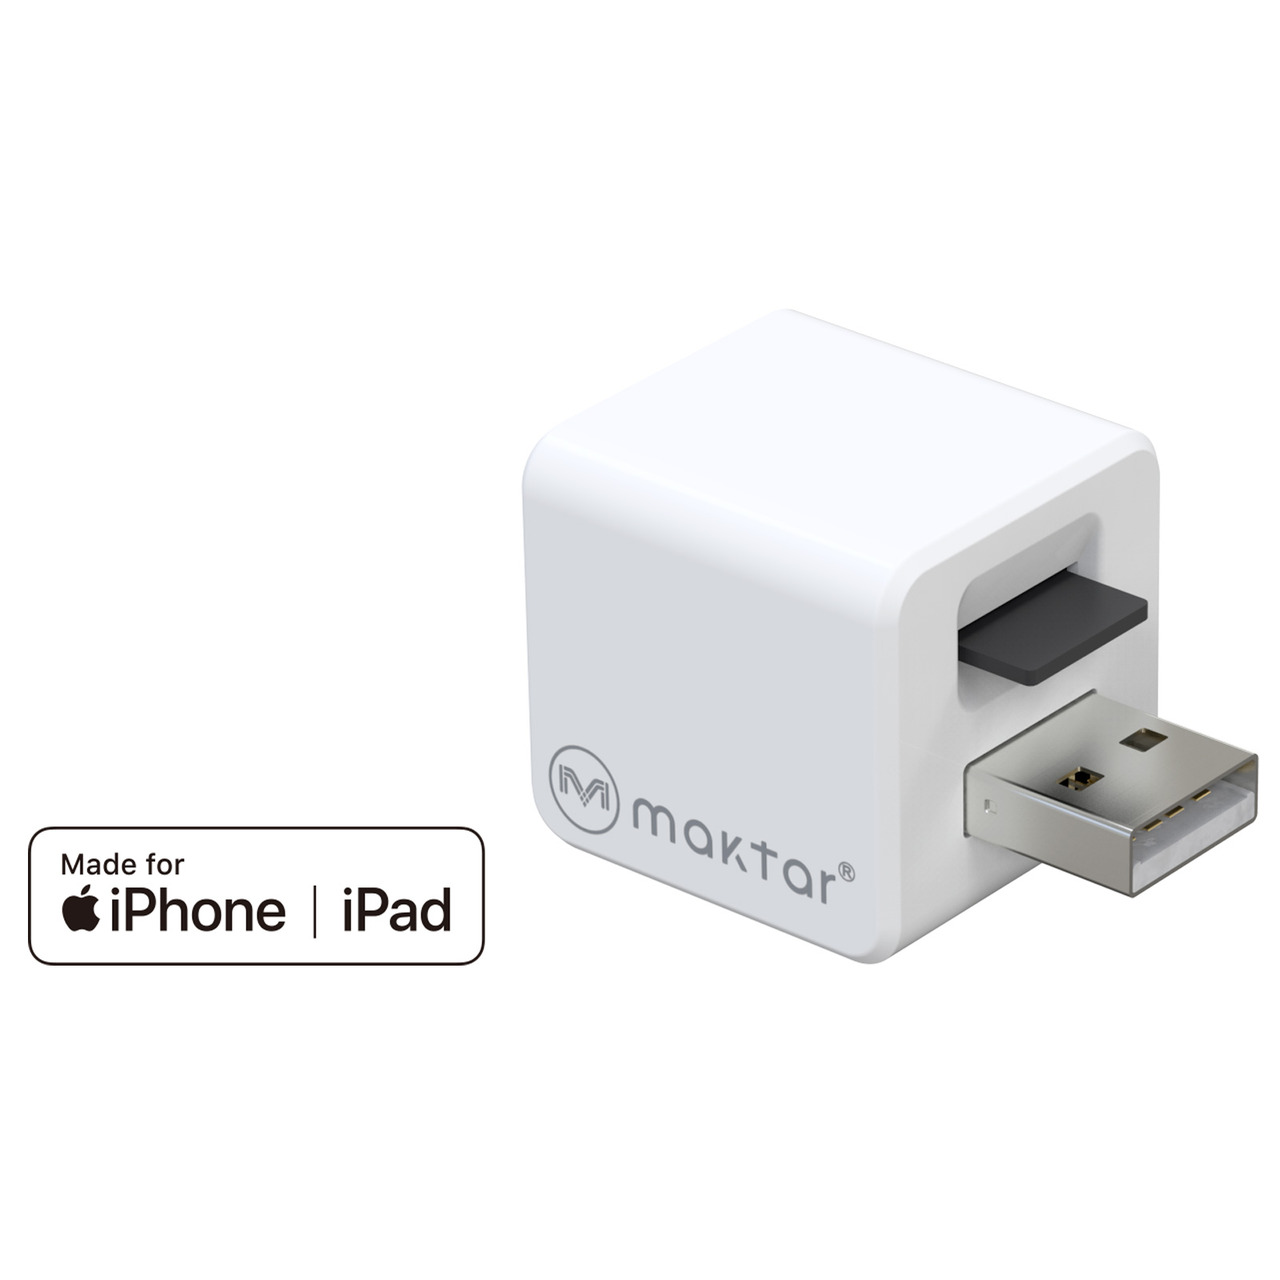 Maktar Auto-Back-up-Adapter Qubii- f黵 iPhone-iPad- speichert Bilder-Videos-Kontakte auf microSD